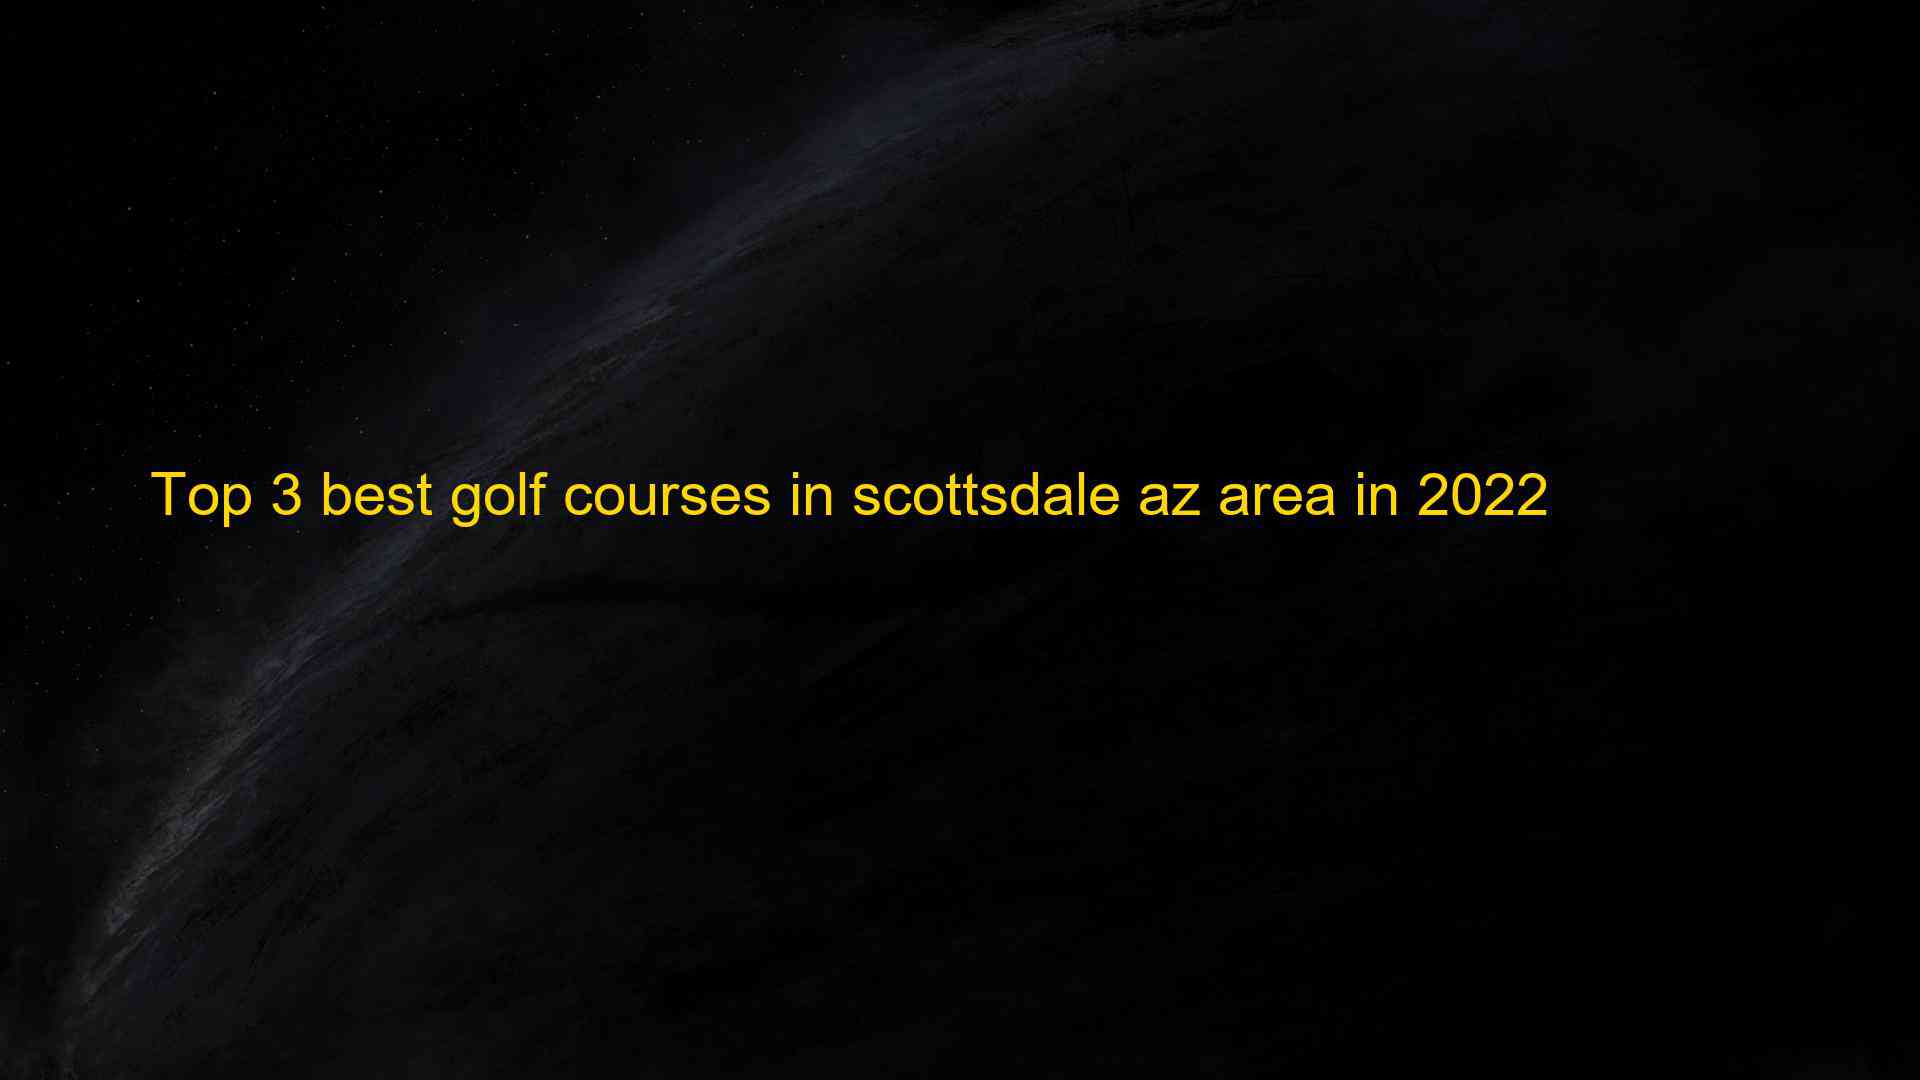 Top 3 best golf courses in scottsdale az area in 2022 1660718413